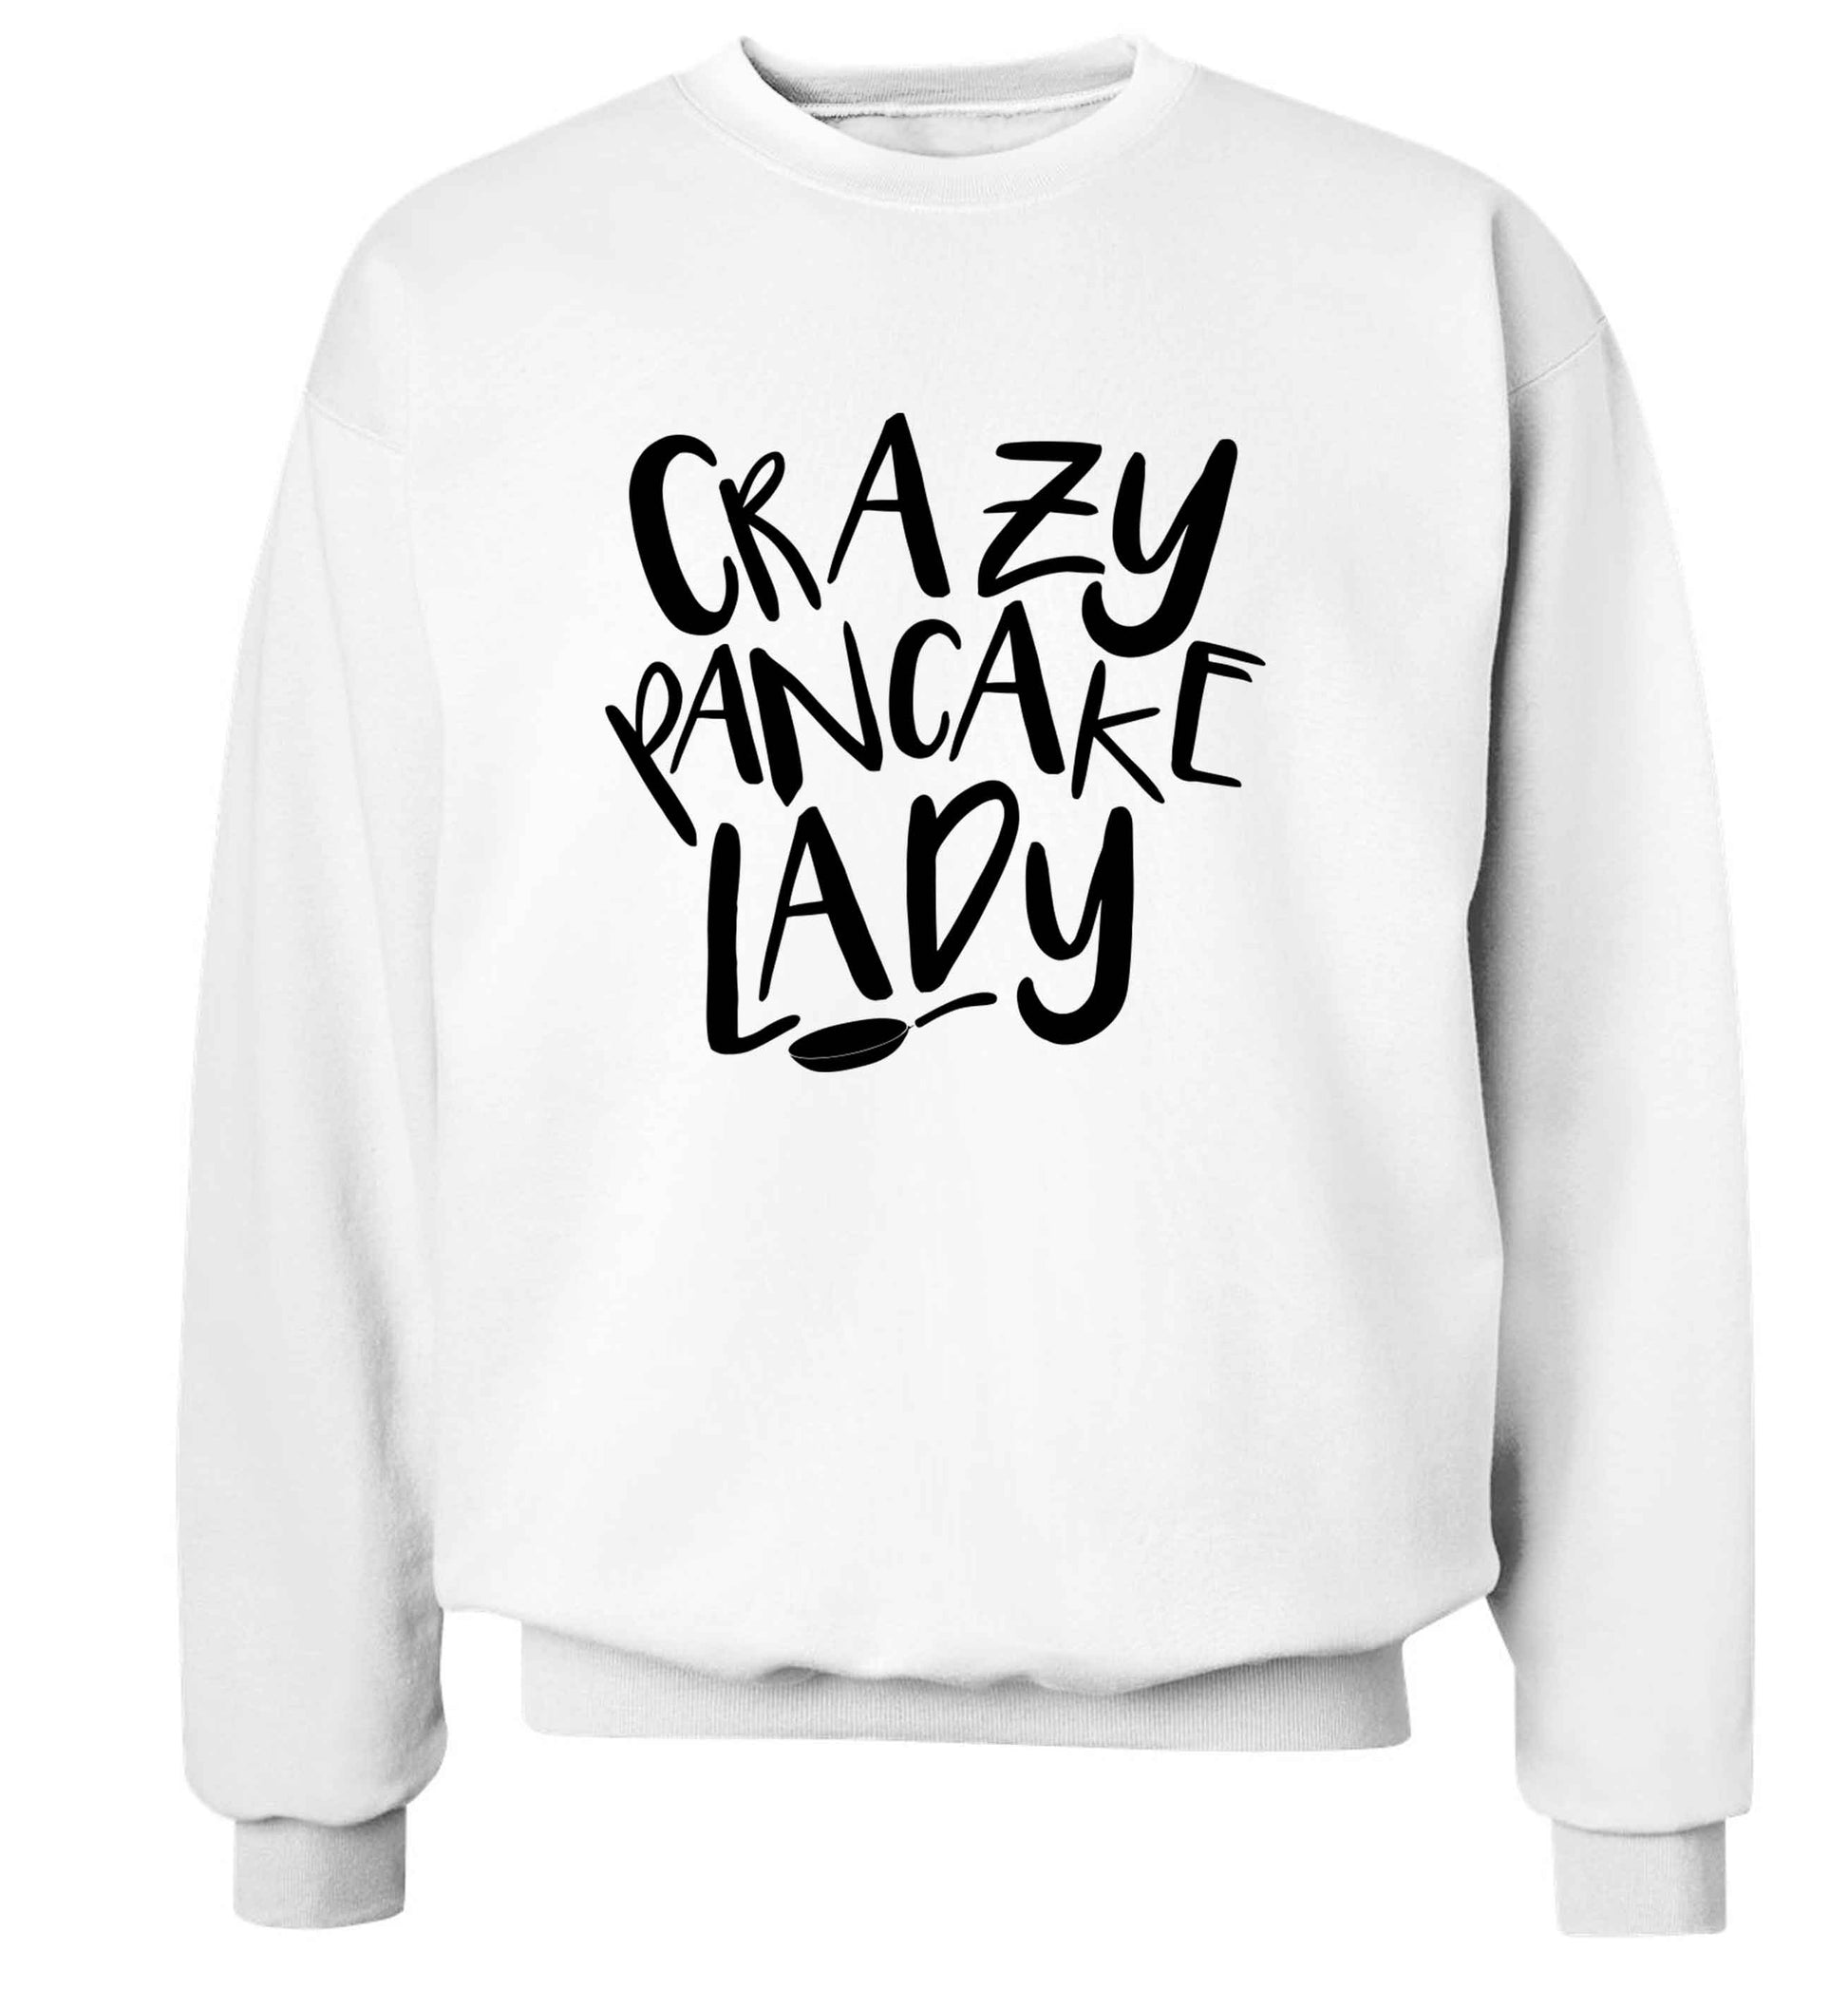 Crazy pancake lady adult's unisex white sweater 2XL